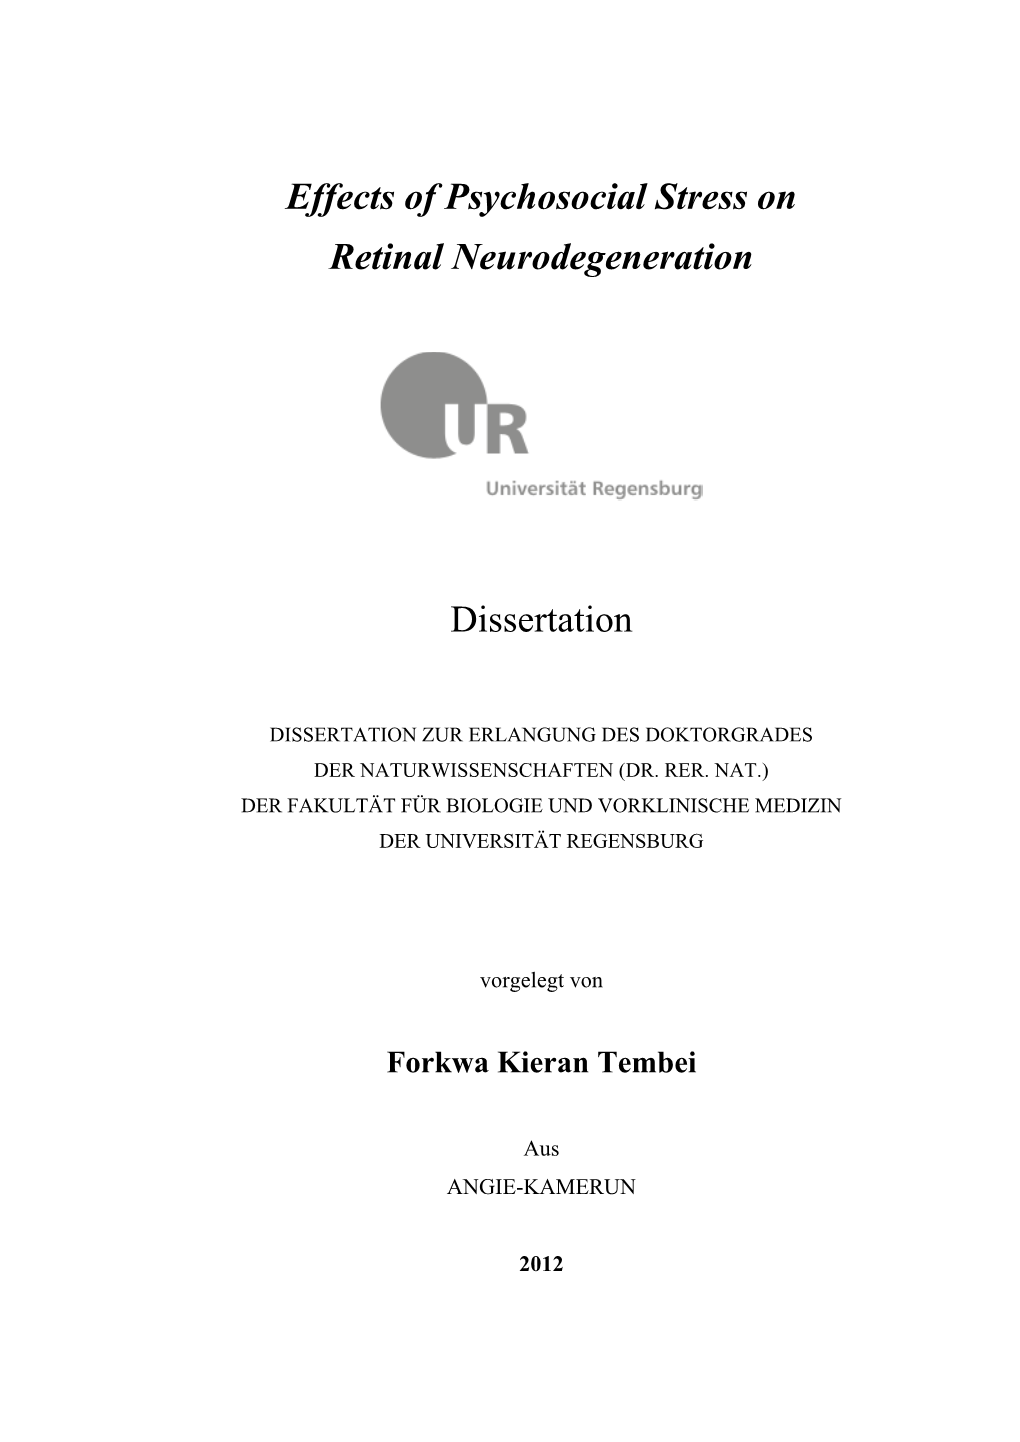 Effects of Psychosocial Stress on Retinal Neurodegeneration